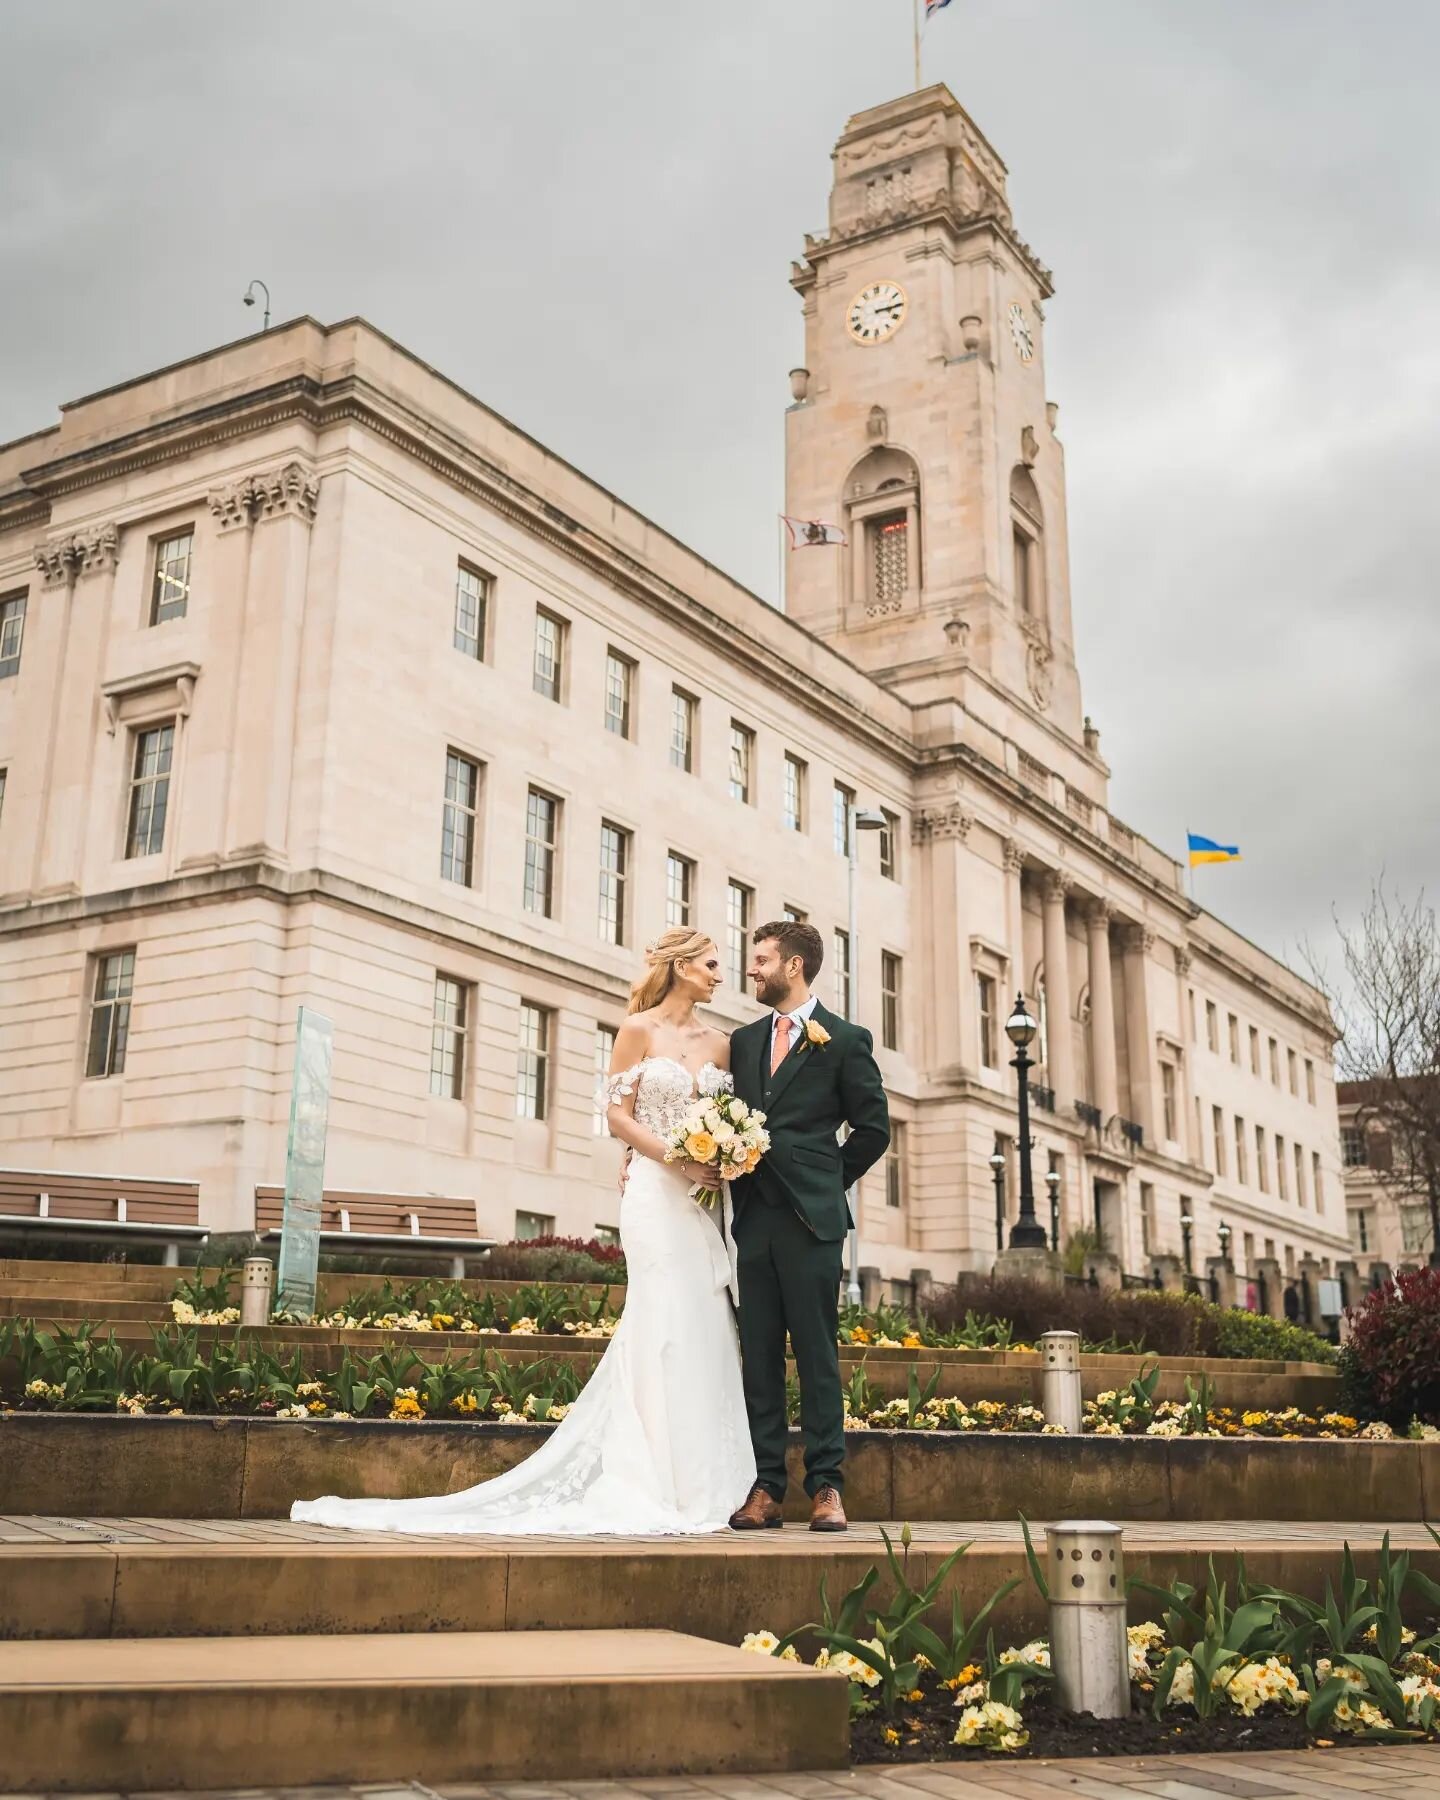 Massive Congratulations to Jade and Ryan for a beautiful, if a bit chilly, wedding yesterday!

#SouthYorkshireWeddings
#SheffieldWeddingPhotography
#YorkshireBrides
#UKWeddingInspo
#WeddingPortraitsUK
#ElegantWeddingsUK
#LoveInYorkshire
#NorthernLove